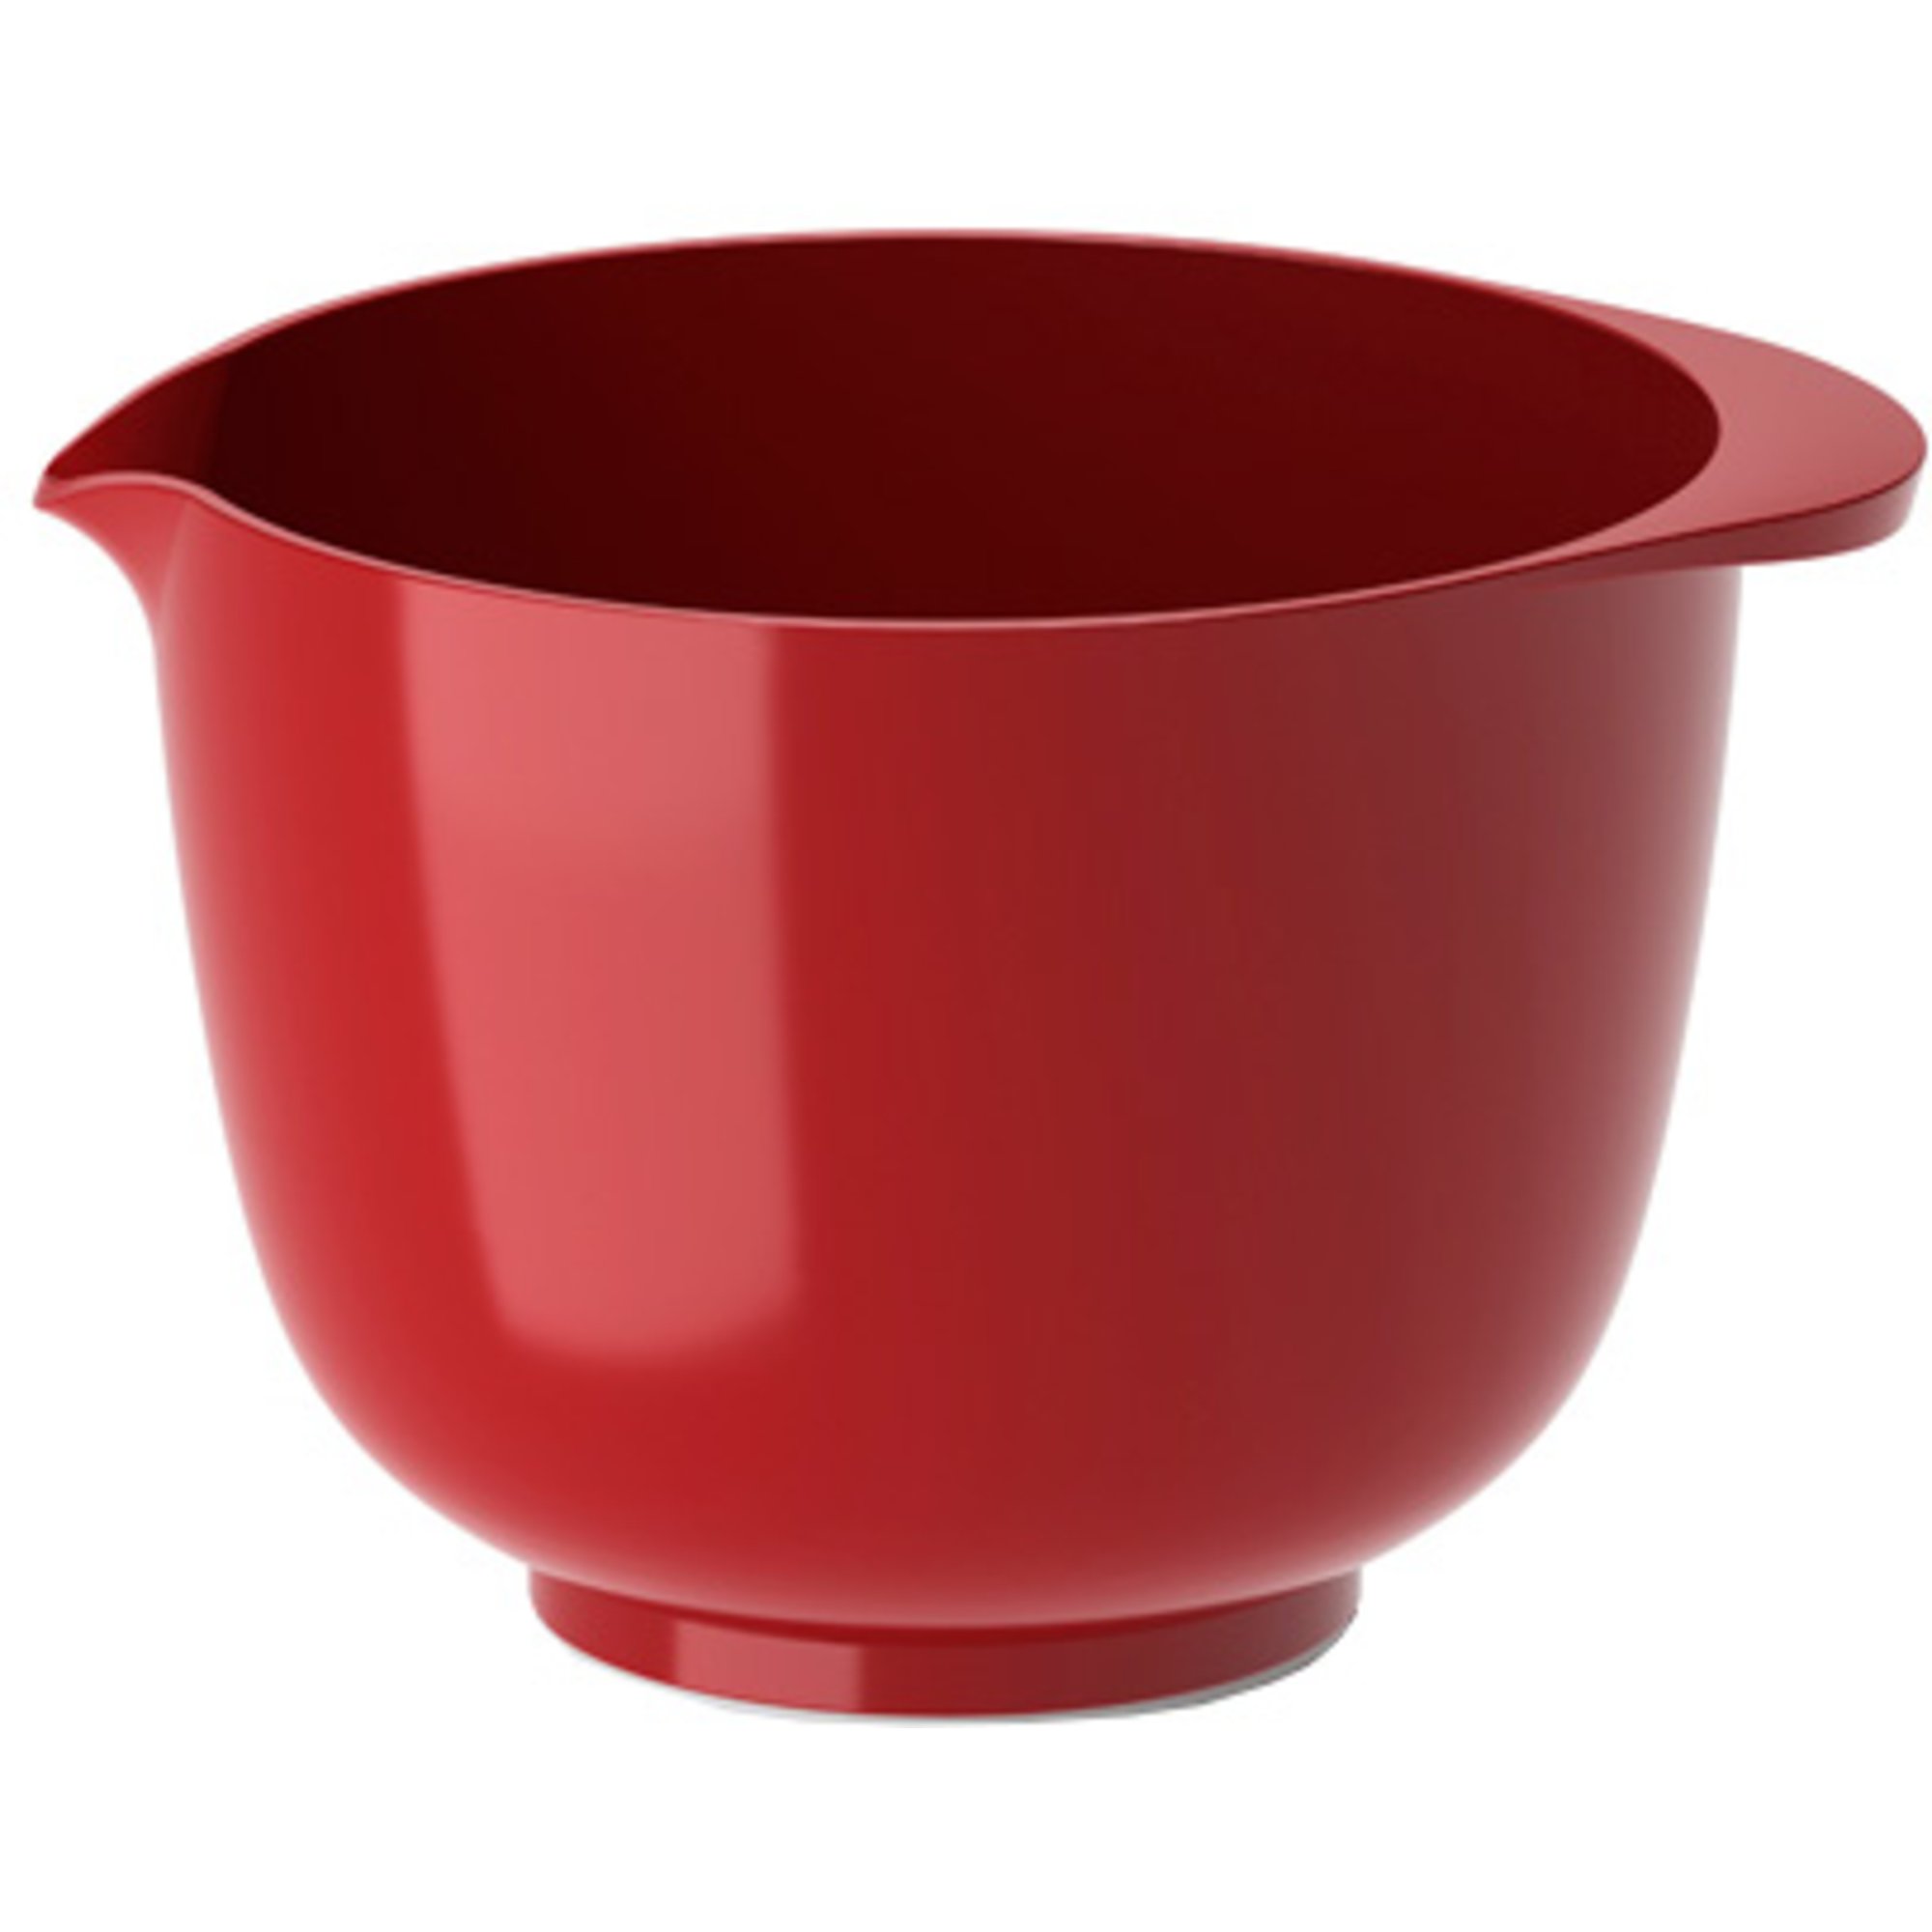 Rosti Margrethe skål 1,5 liter, röd